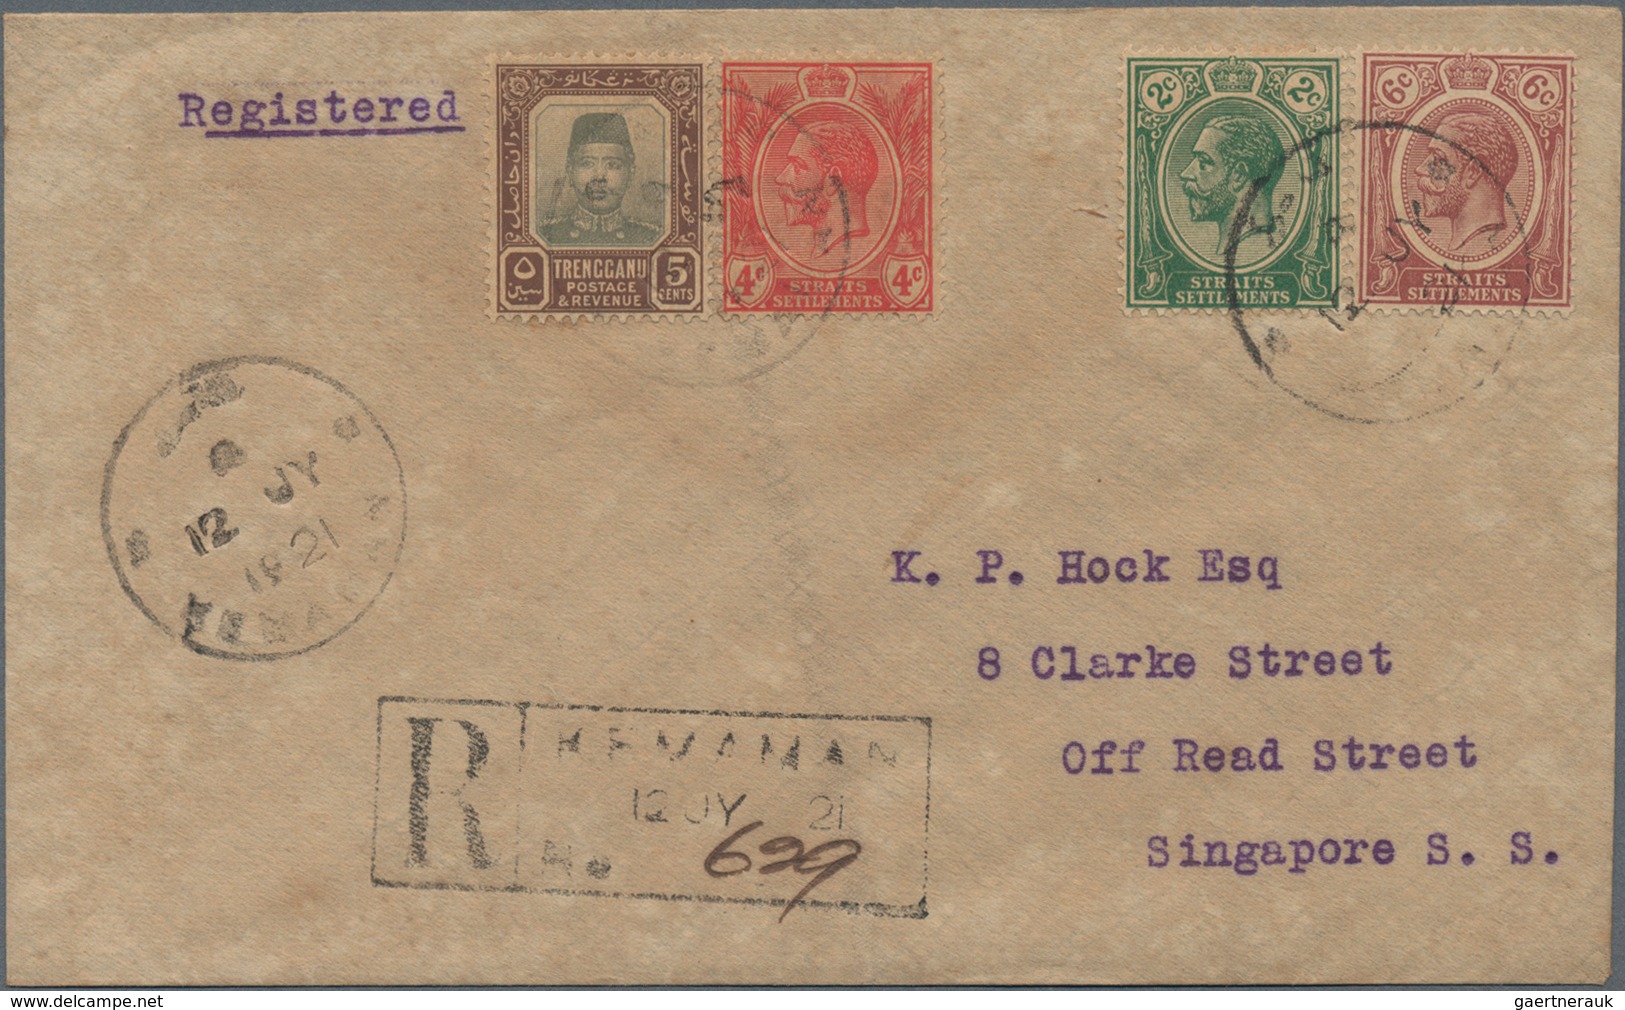 Malaiische Staaten - Trengganu: 1921 Registered Cover From Kemaman To Singapur Franked By Trengganu - Trengganu